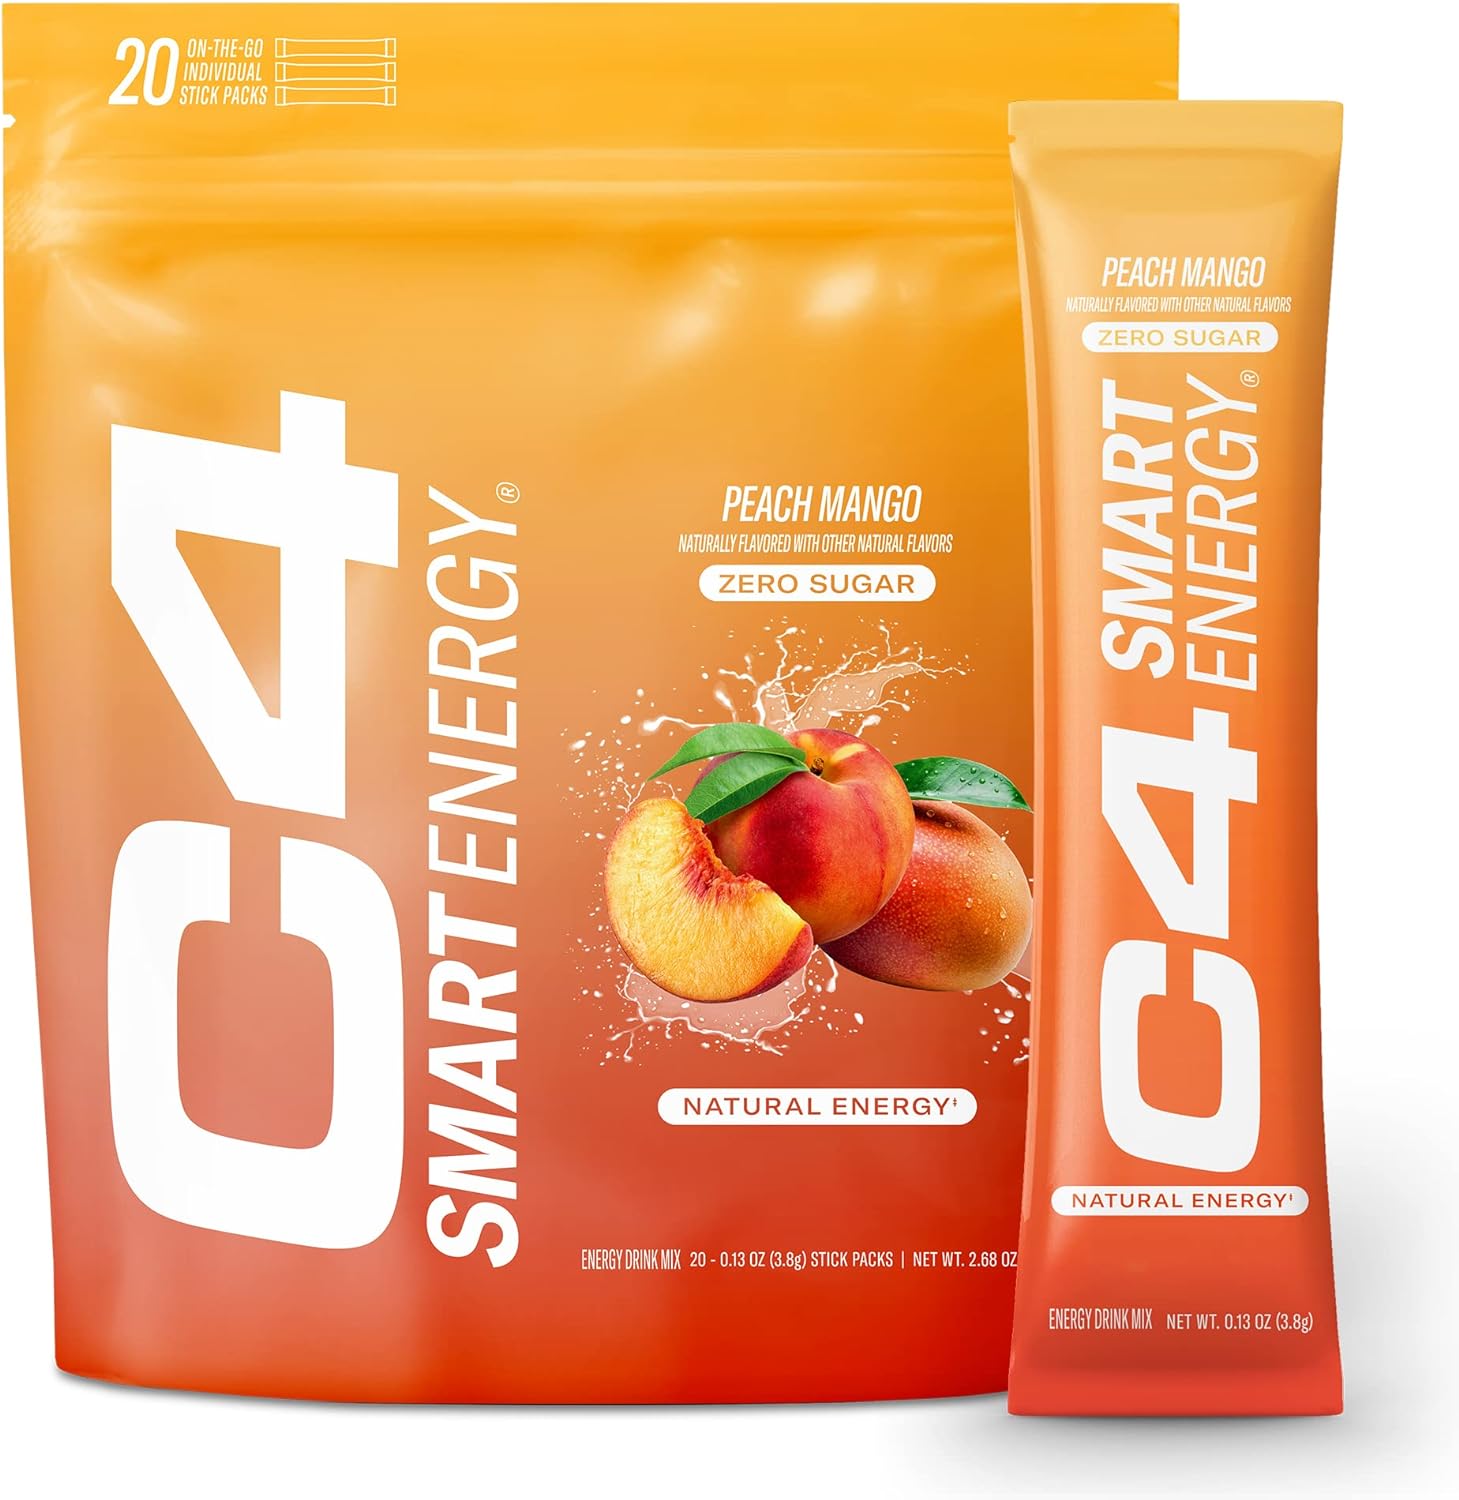 C4 Smart Energy Powder Stick Packs - Sugar Free Performance Fuel & Nootropic Brain Booster, Coffee Substitute or Alternative | Peach Mango - 20 Count